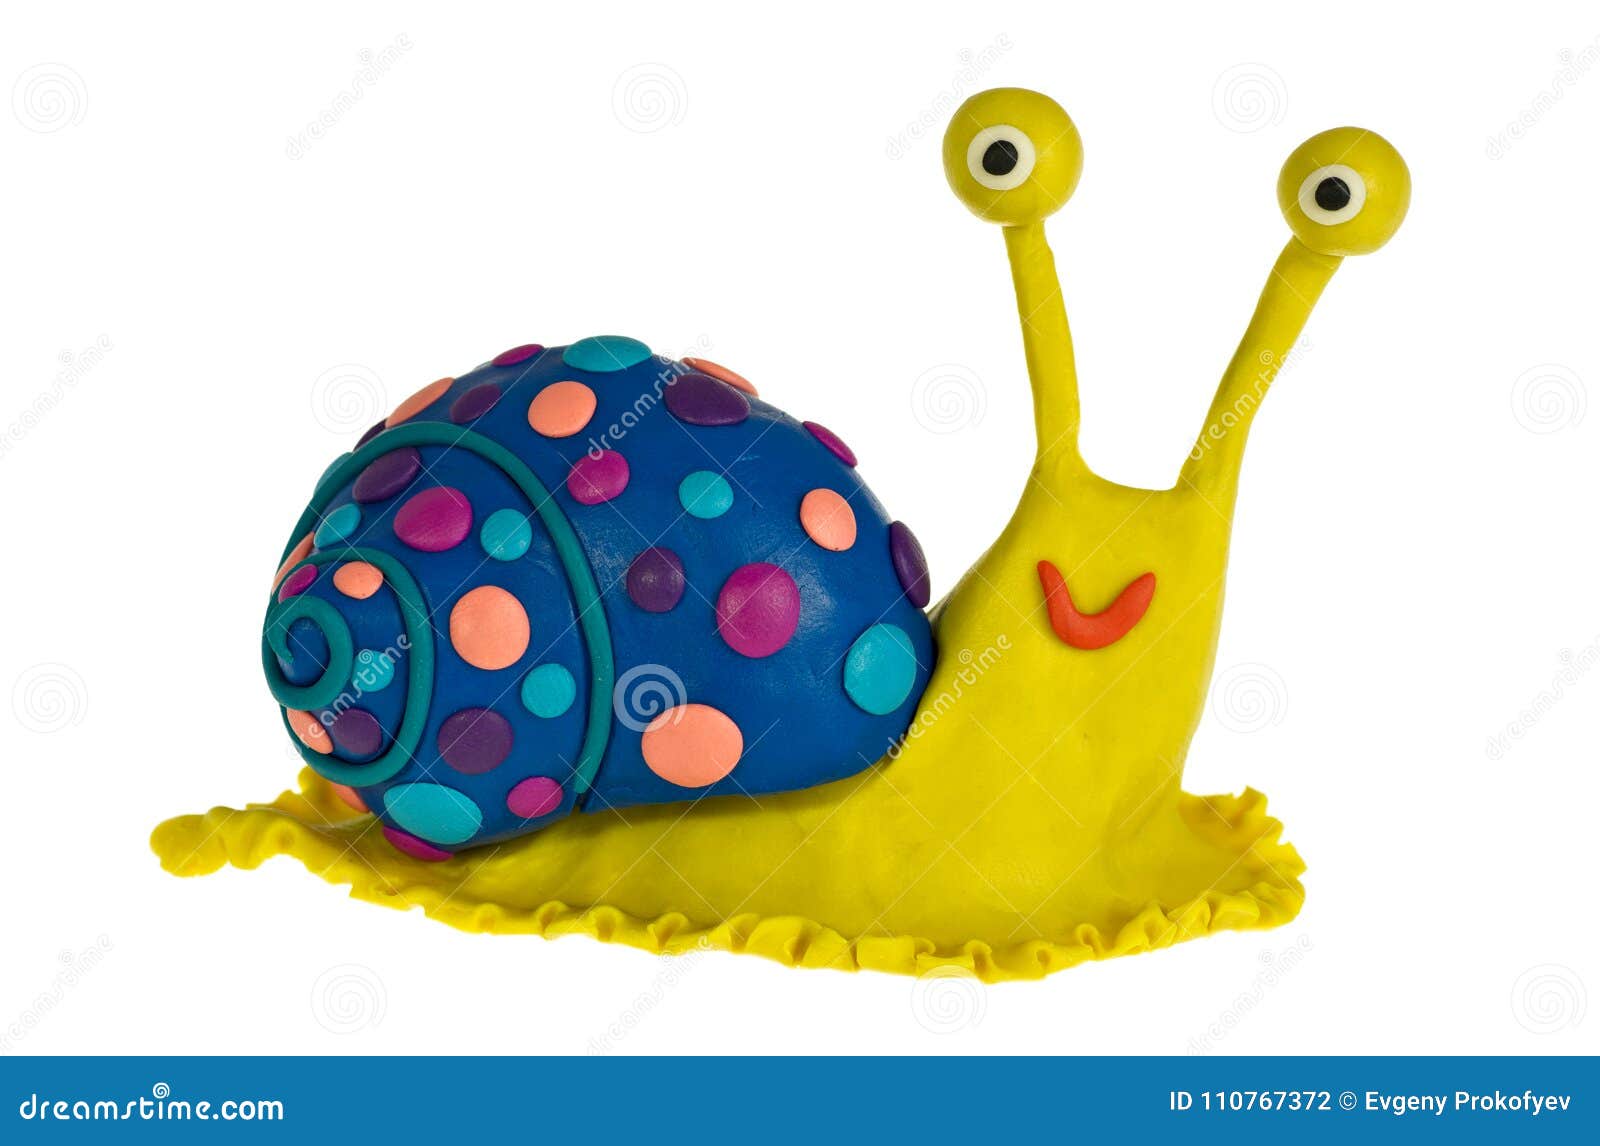 funny plasticine snail